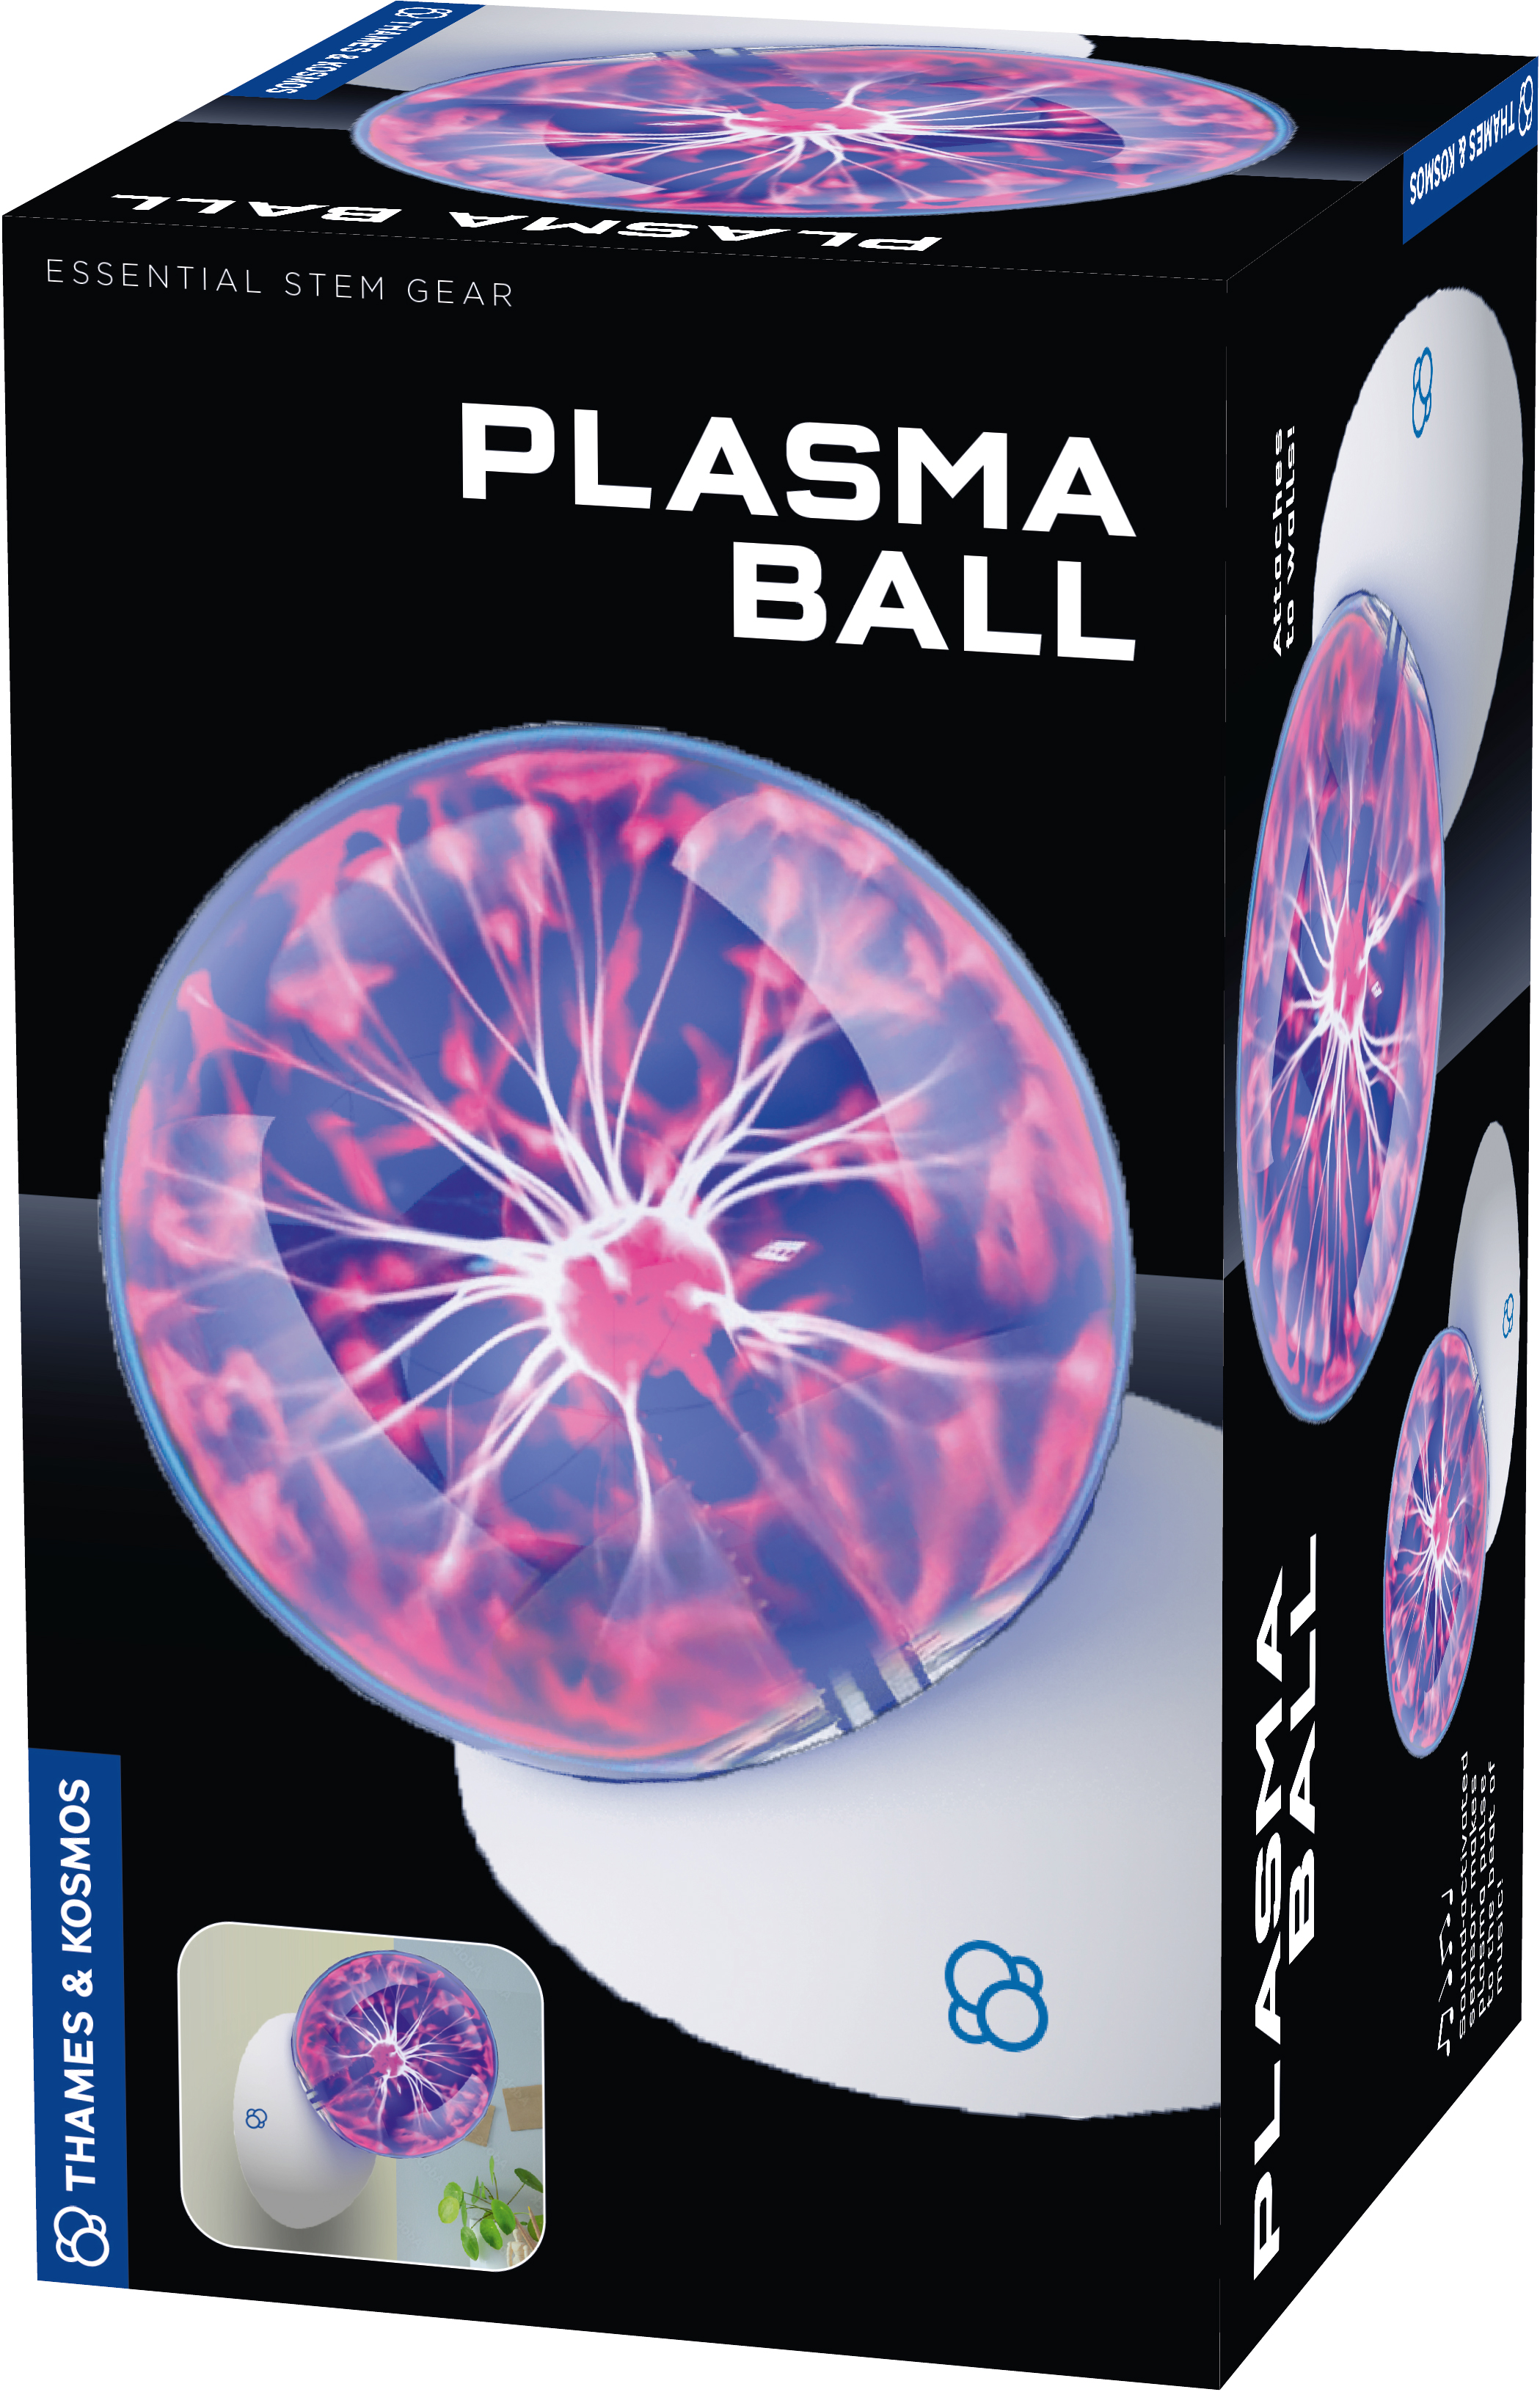 Experience Mesmerizing Plasma Ball Light Show 